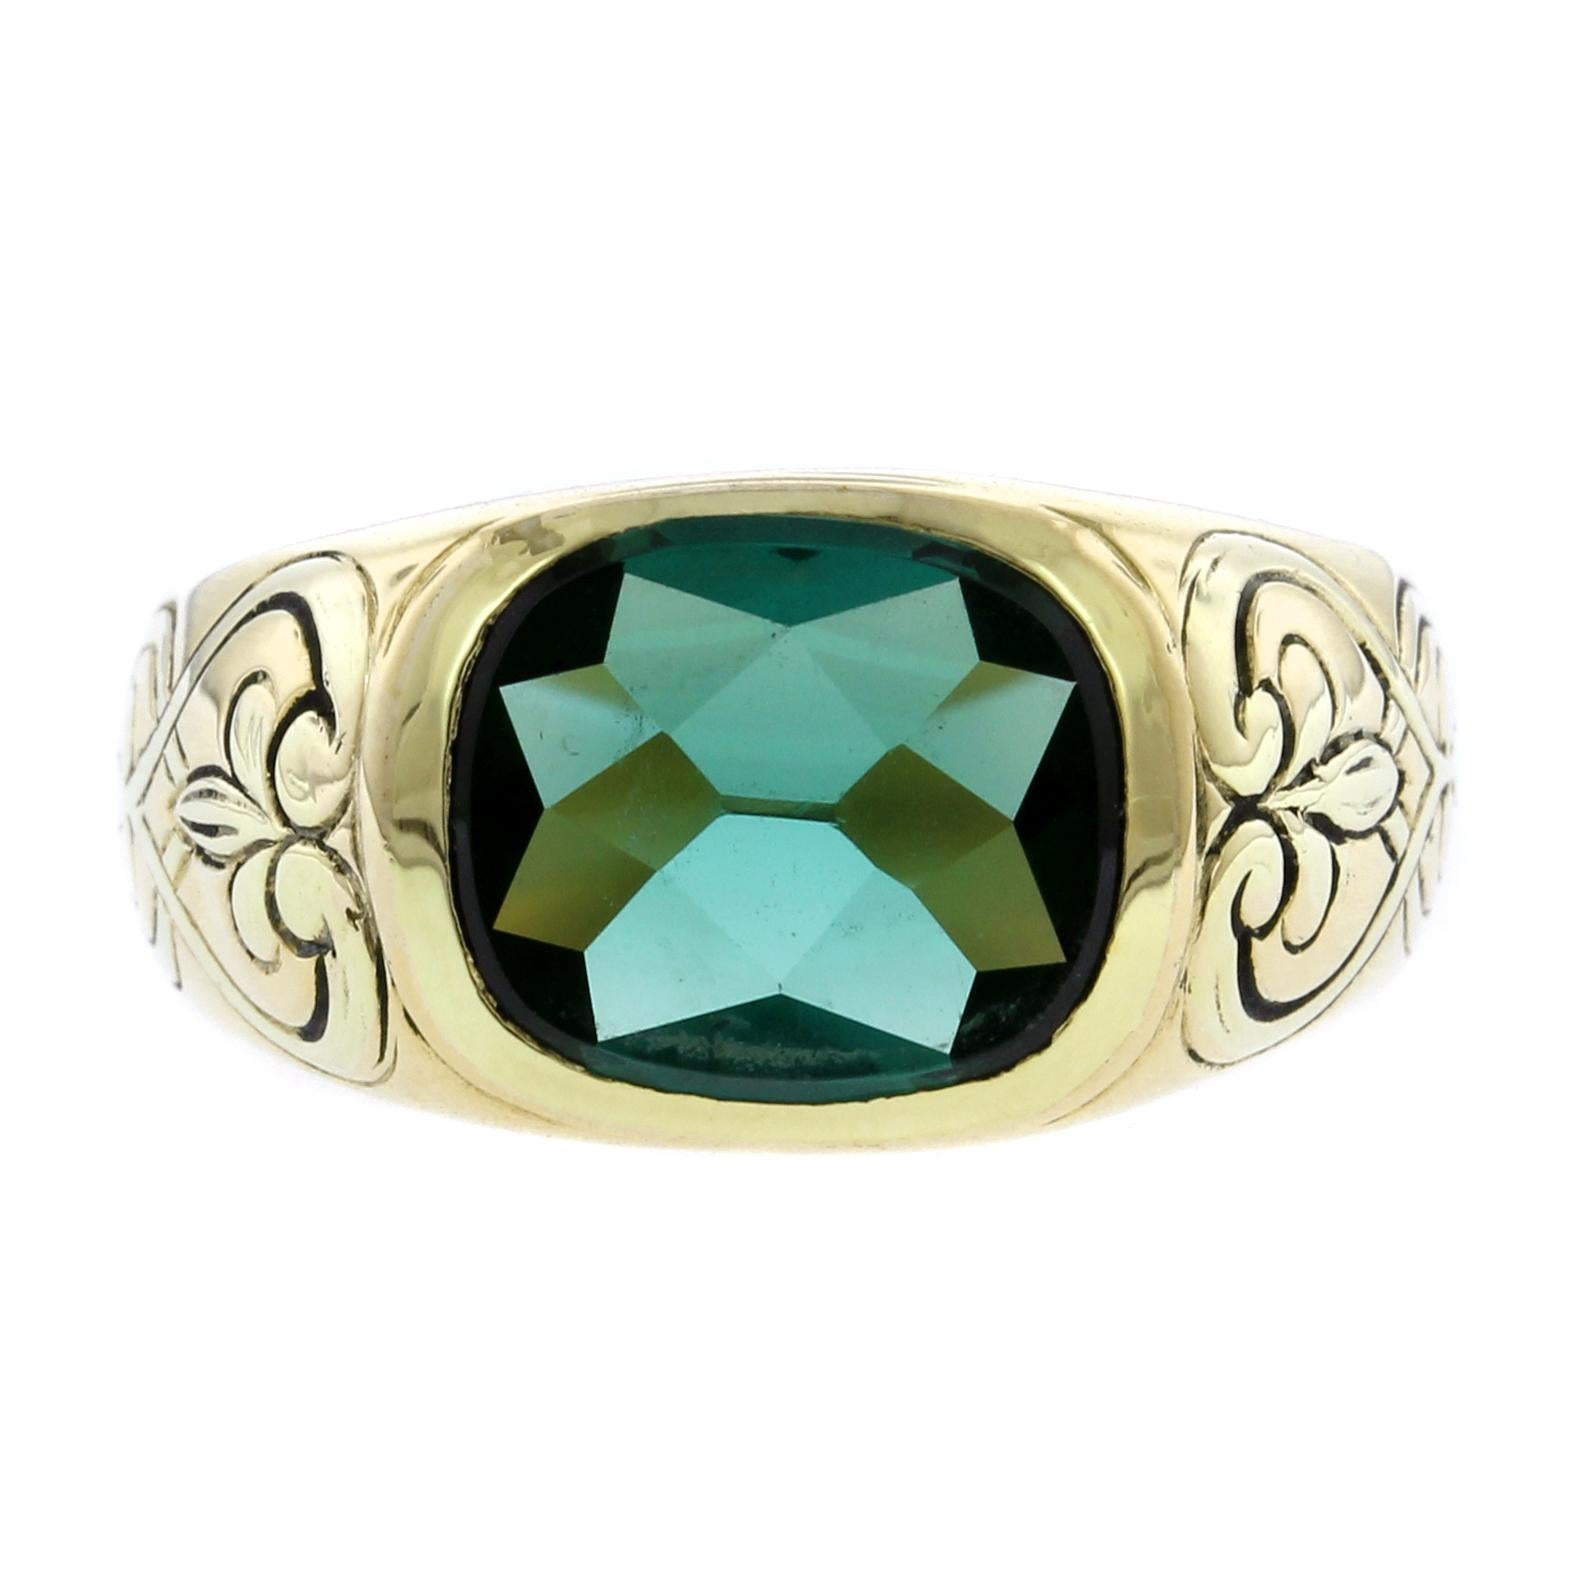 F. Walter Lawrence Art Nouveau 18 Karat Yellow Gold Green Tourmaline Ring